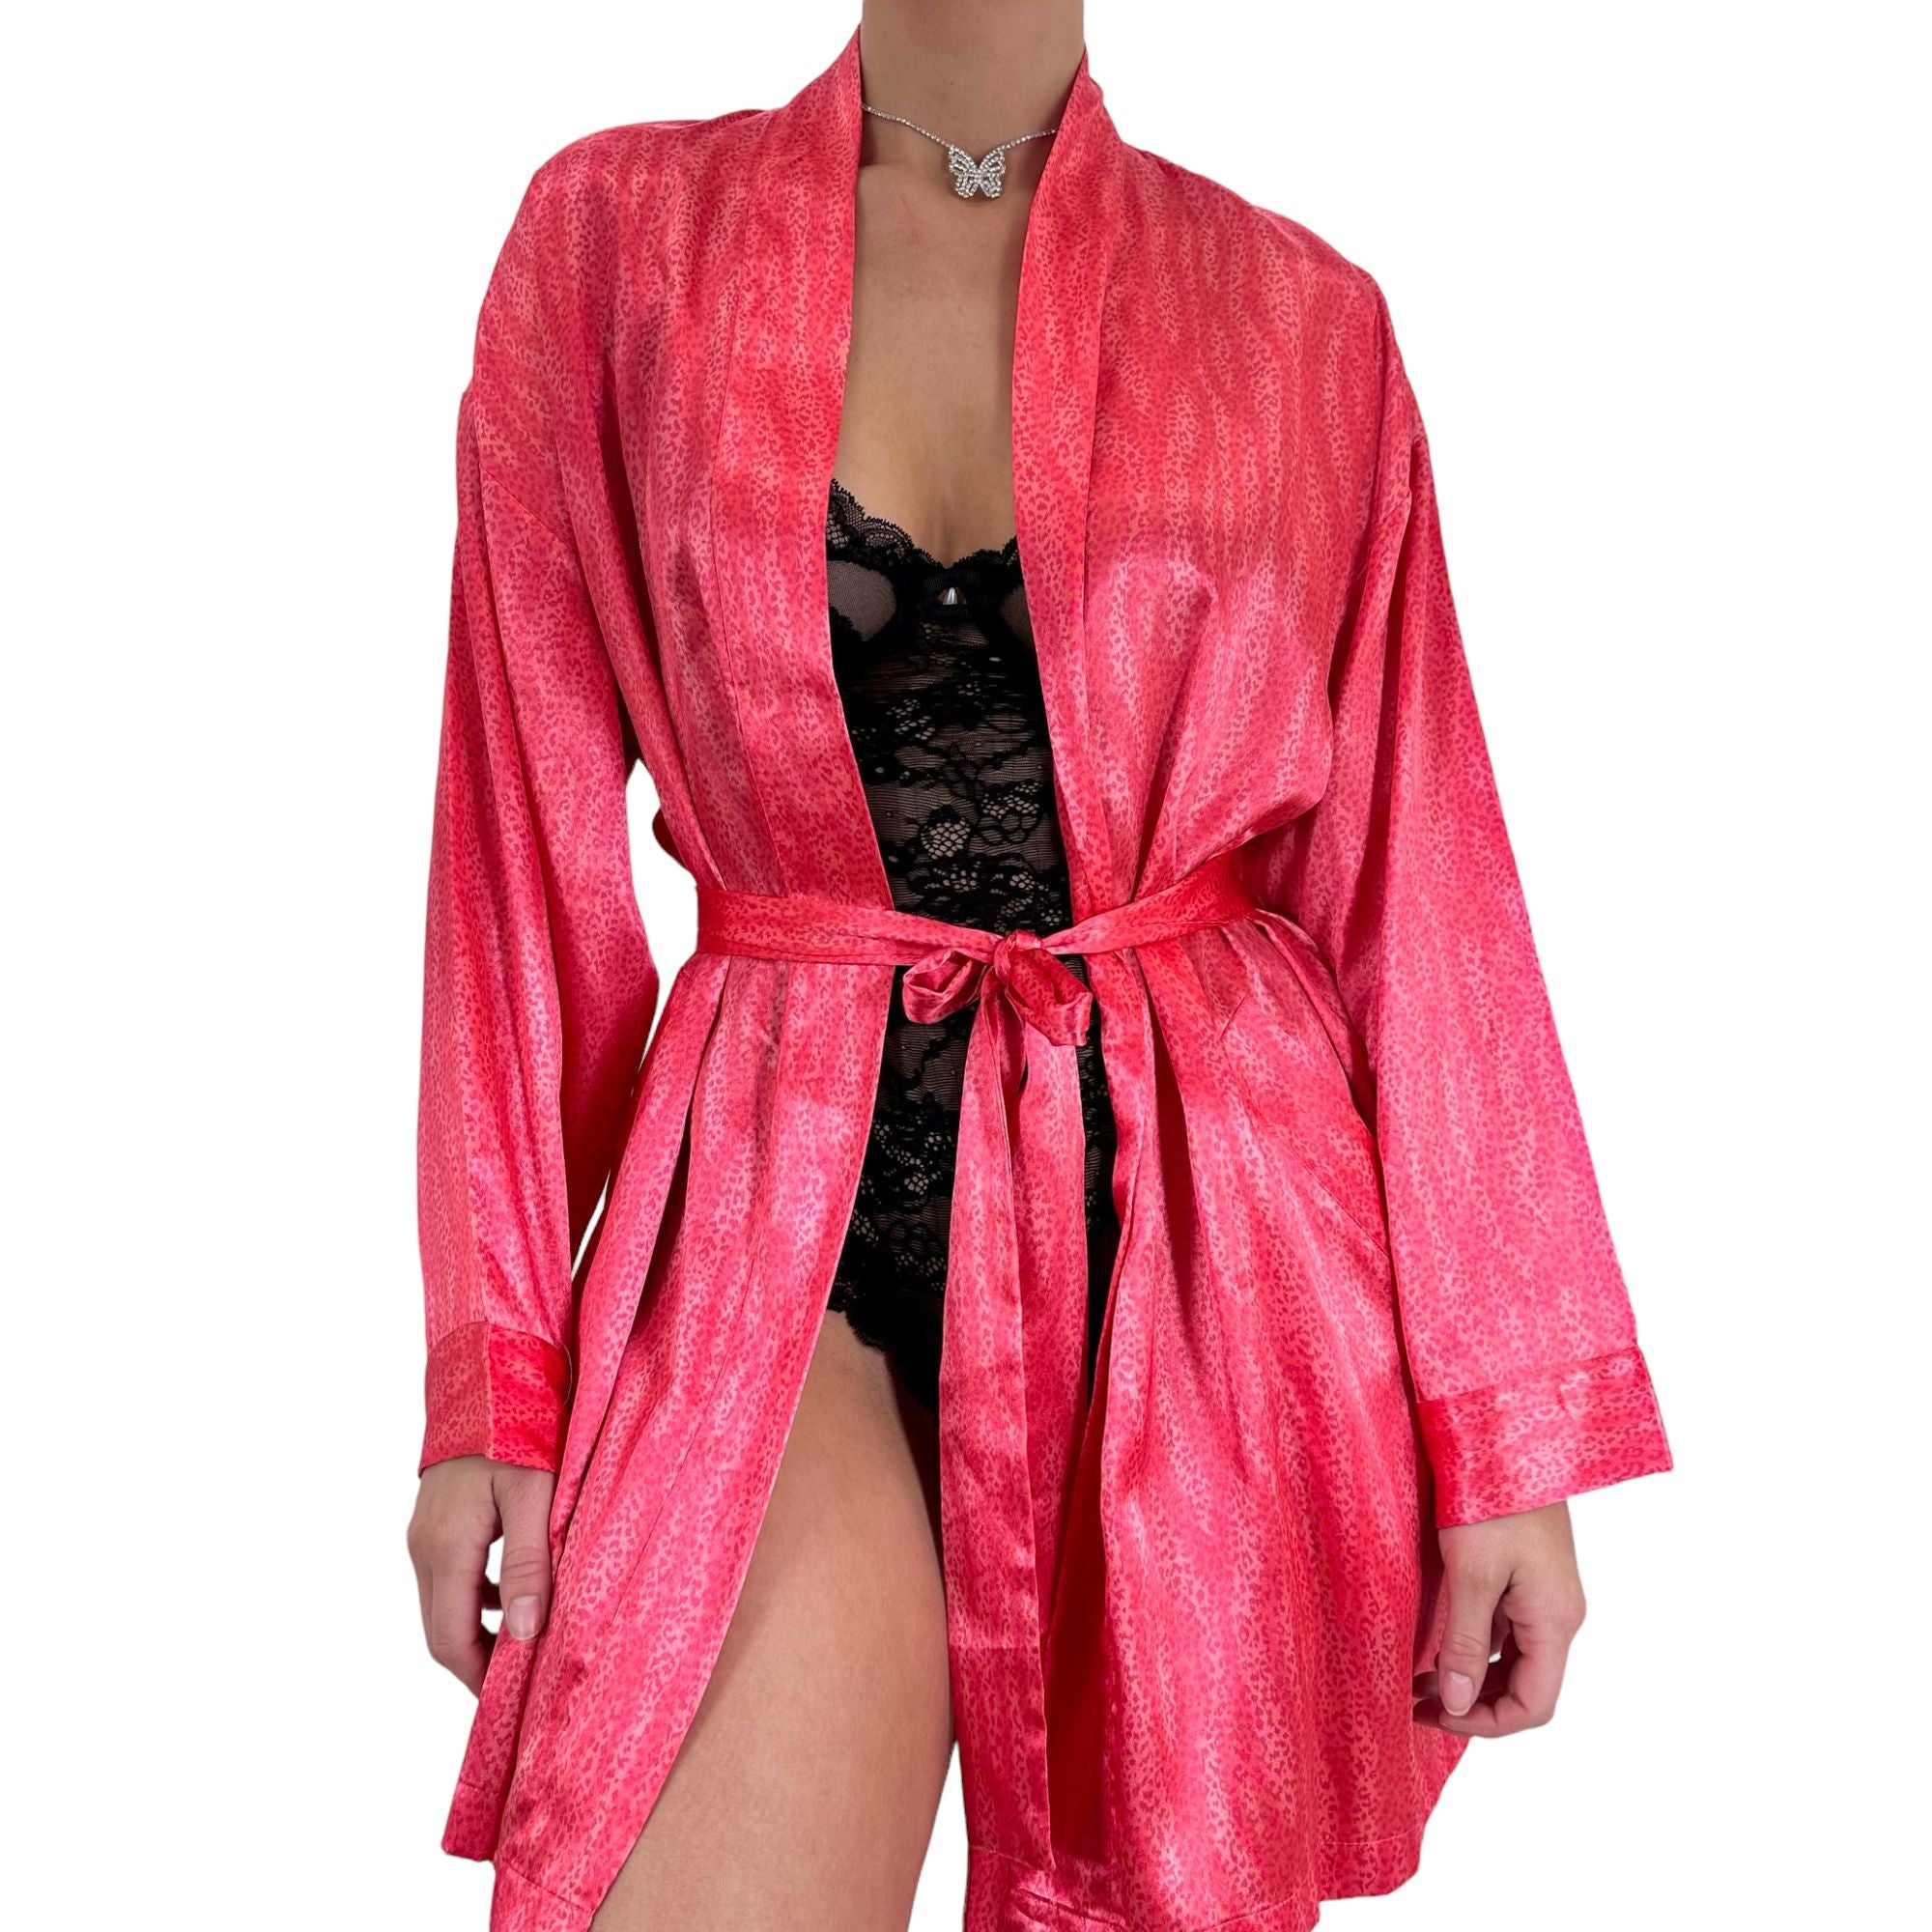 Y2k Vintage Victoria's Secret Cheetah Print Pink Satin Robe [S-L]